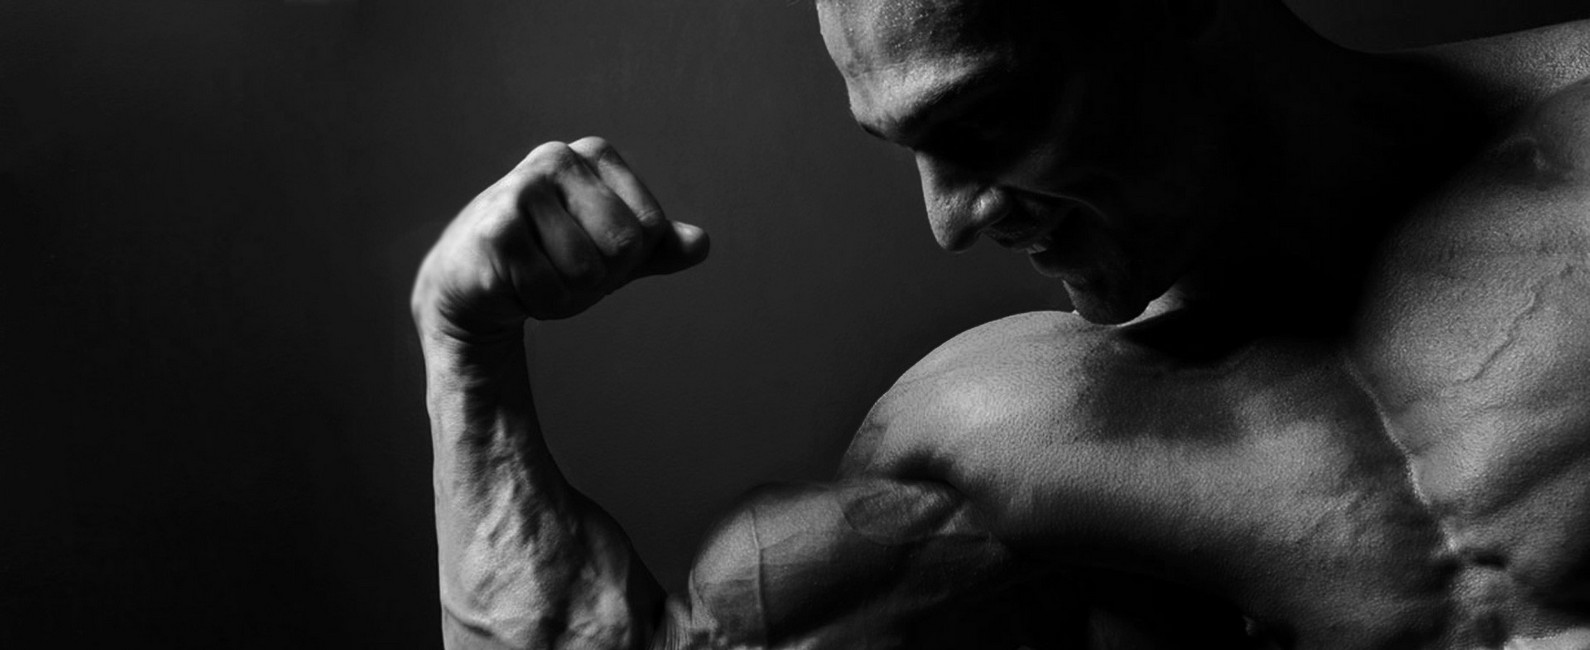 Top 10 cutting steroids